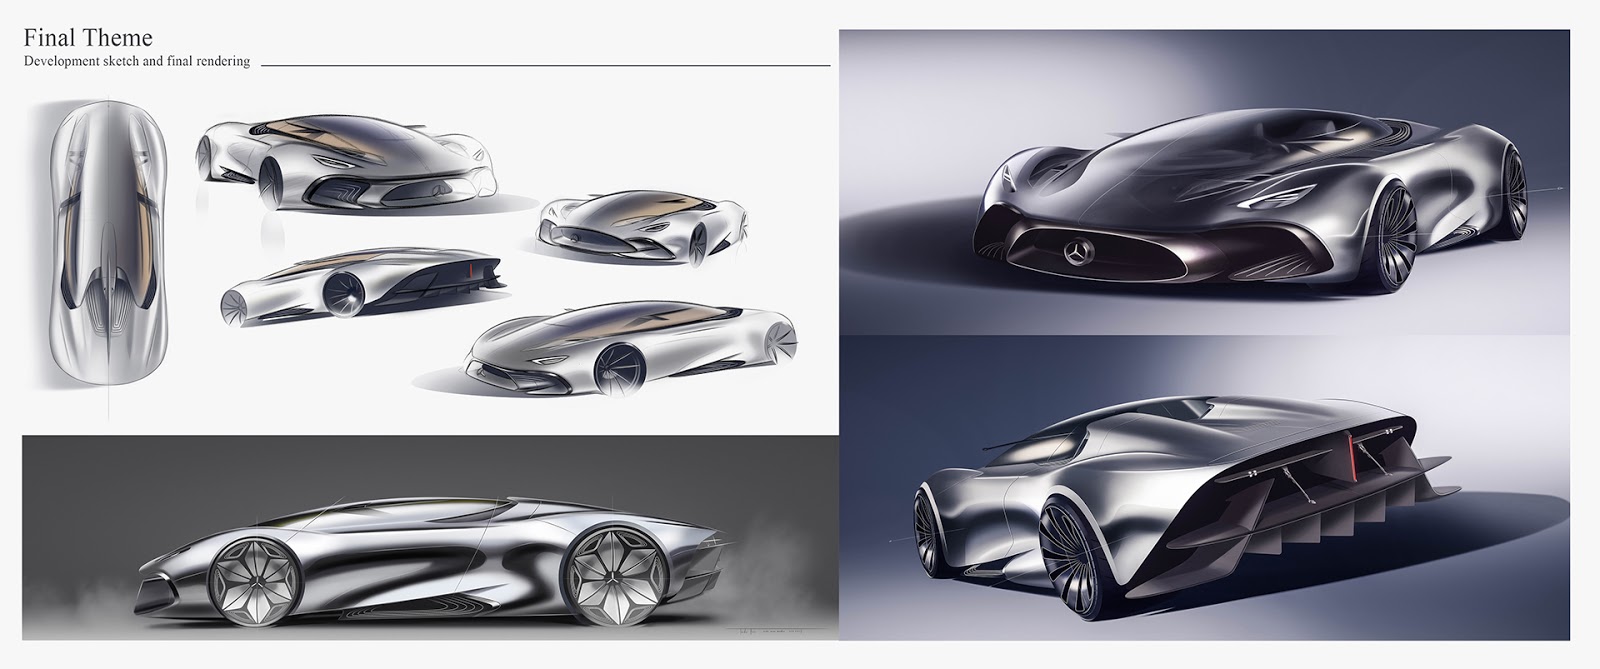 Mercedes-Hybrid-Supercar-Concept-4.jpg